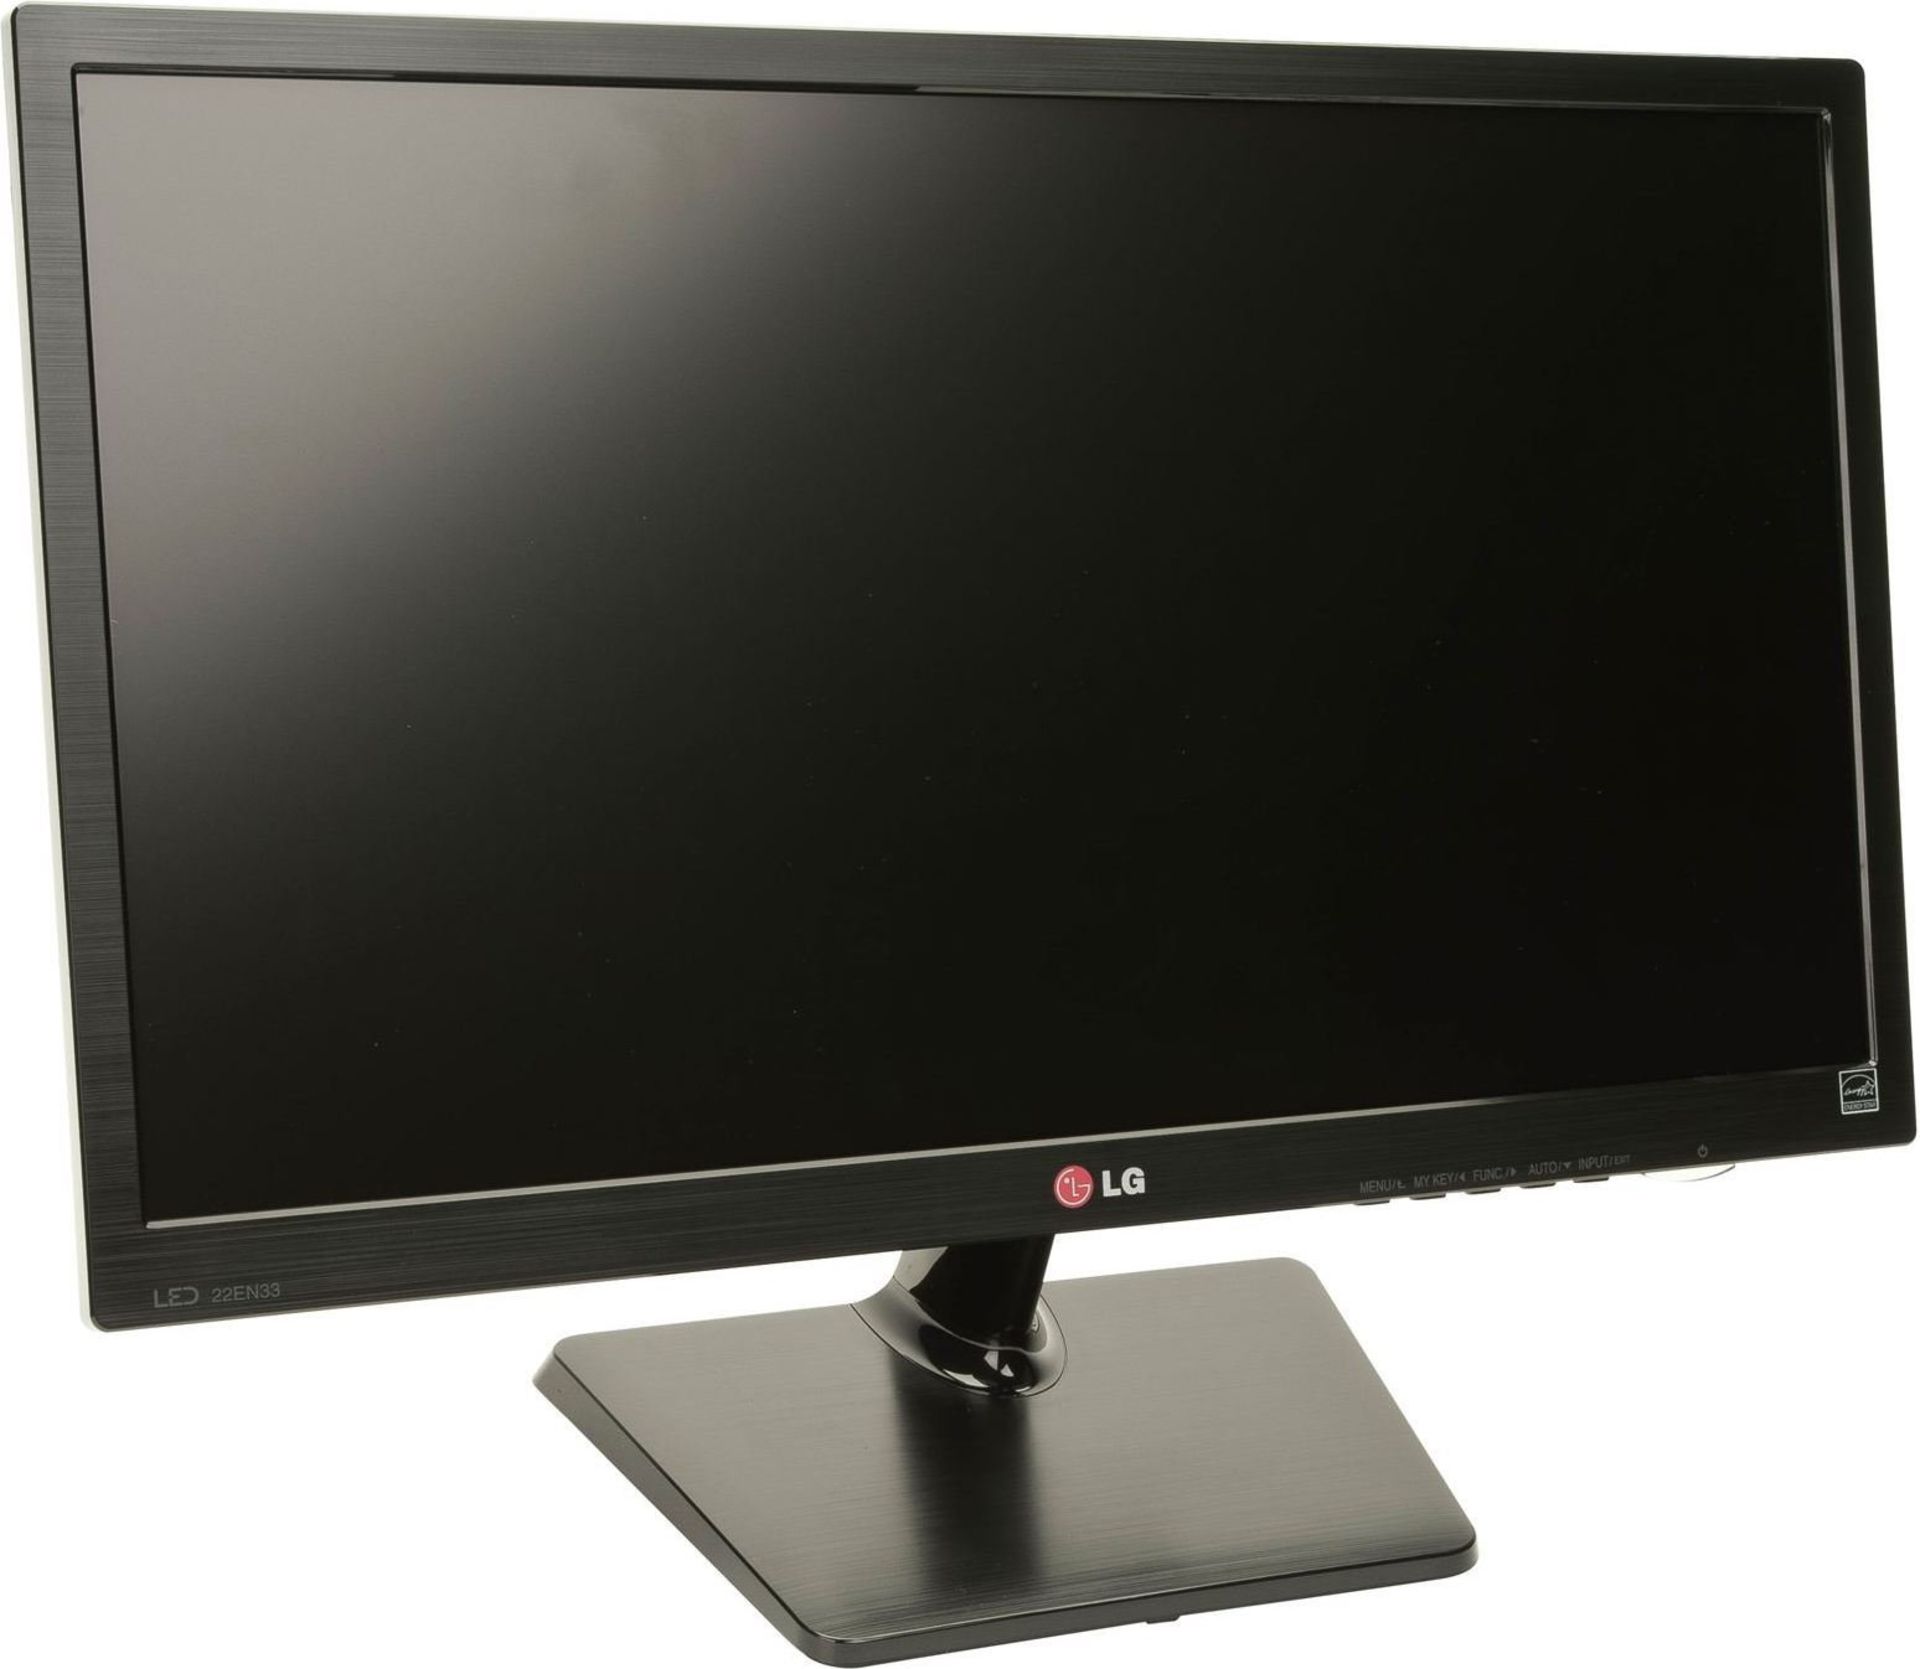 1 x LG 21.5" Full HD LED Monitor - Model 22N33S - Resolution 1920 x 1080 - Response time 5 ms -